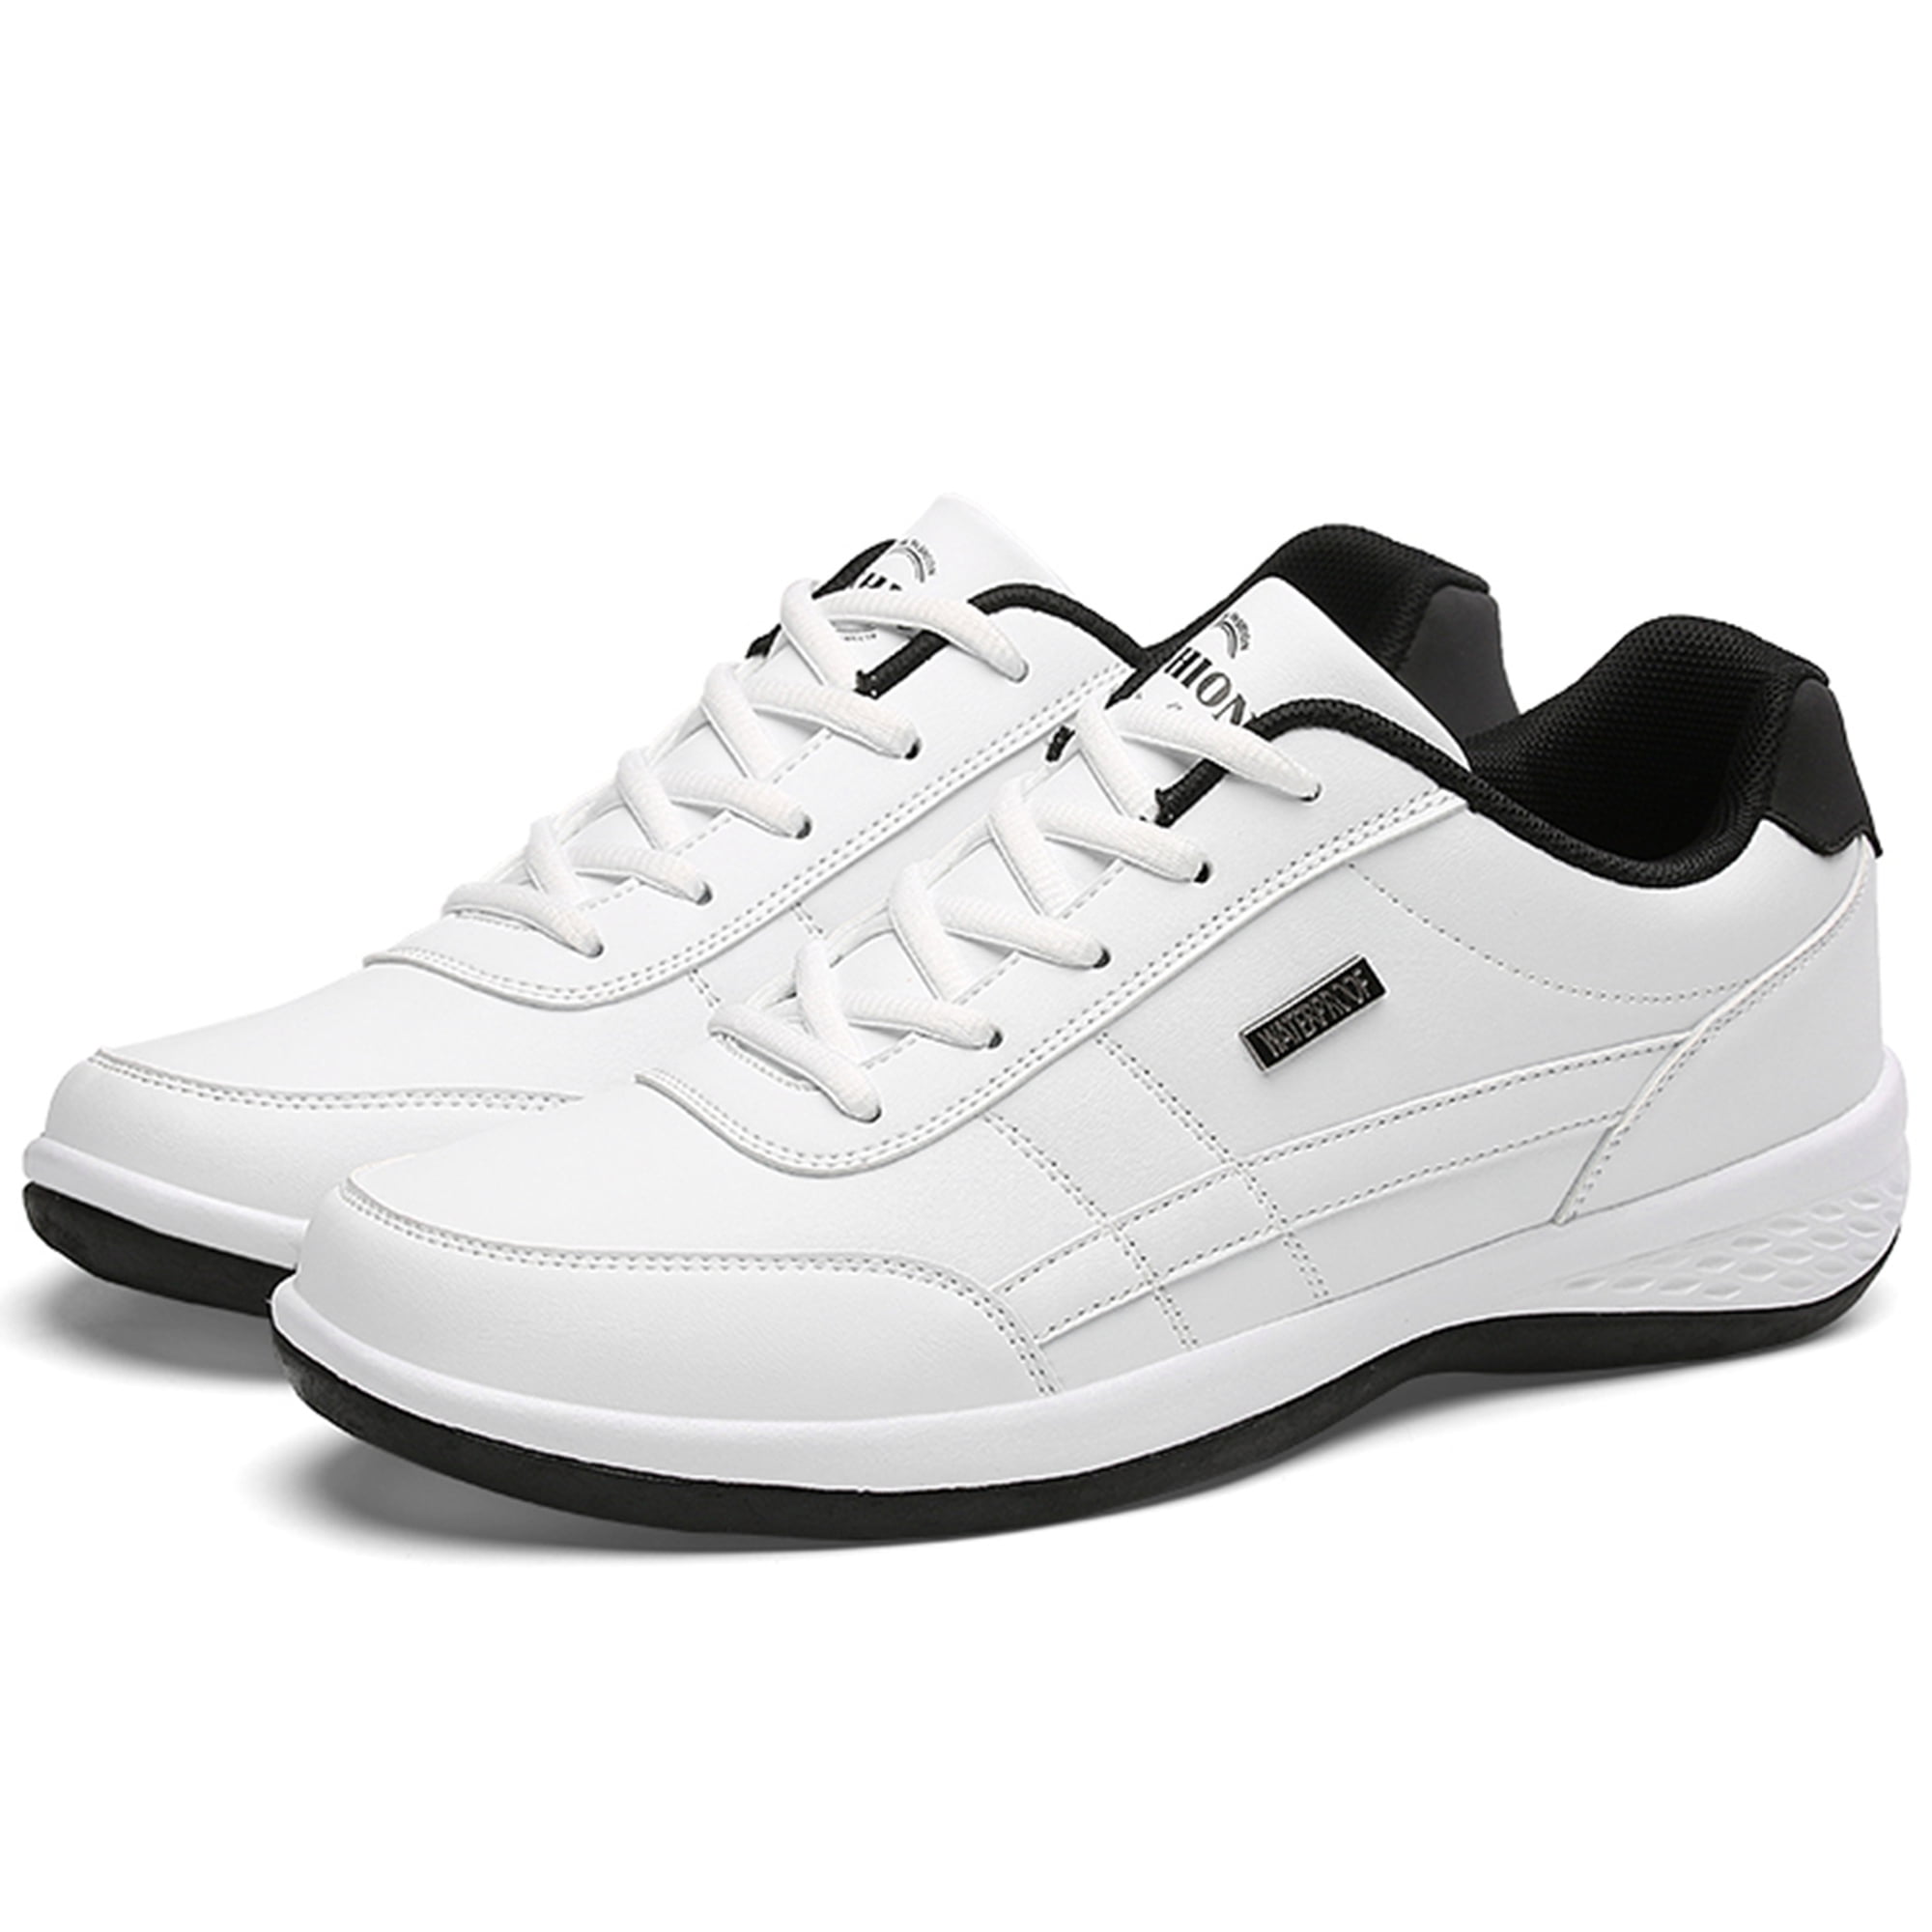 BUBUDENG Shoes for Men Lightweight Walking Sneakers Comfort Casual ...